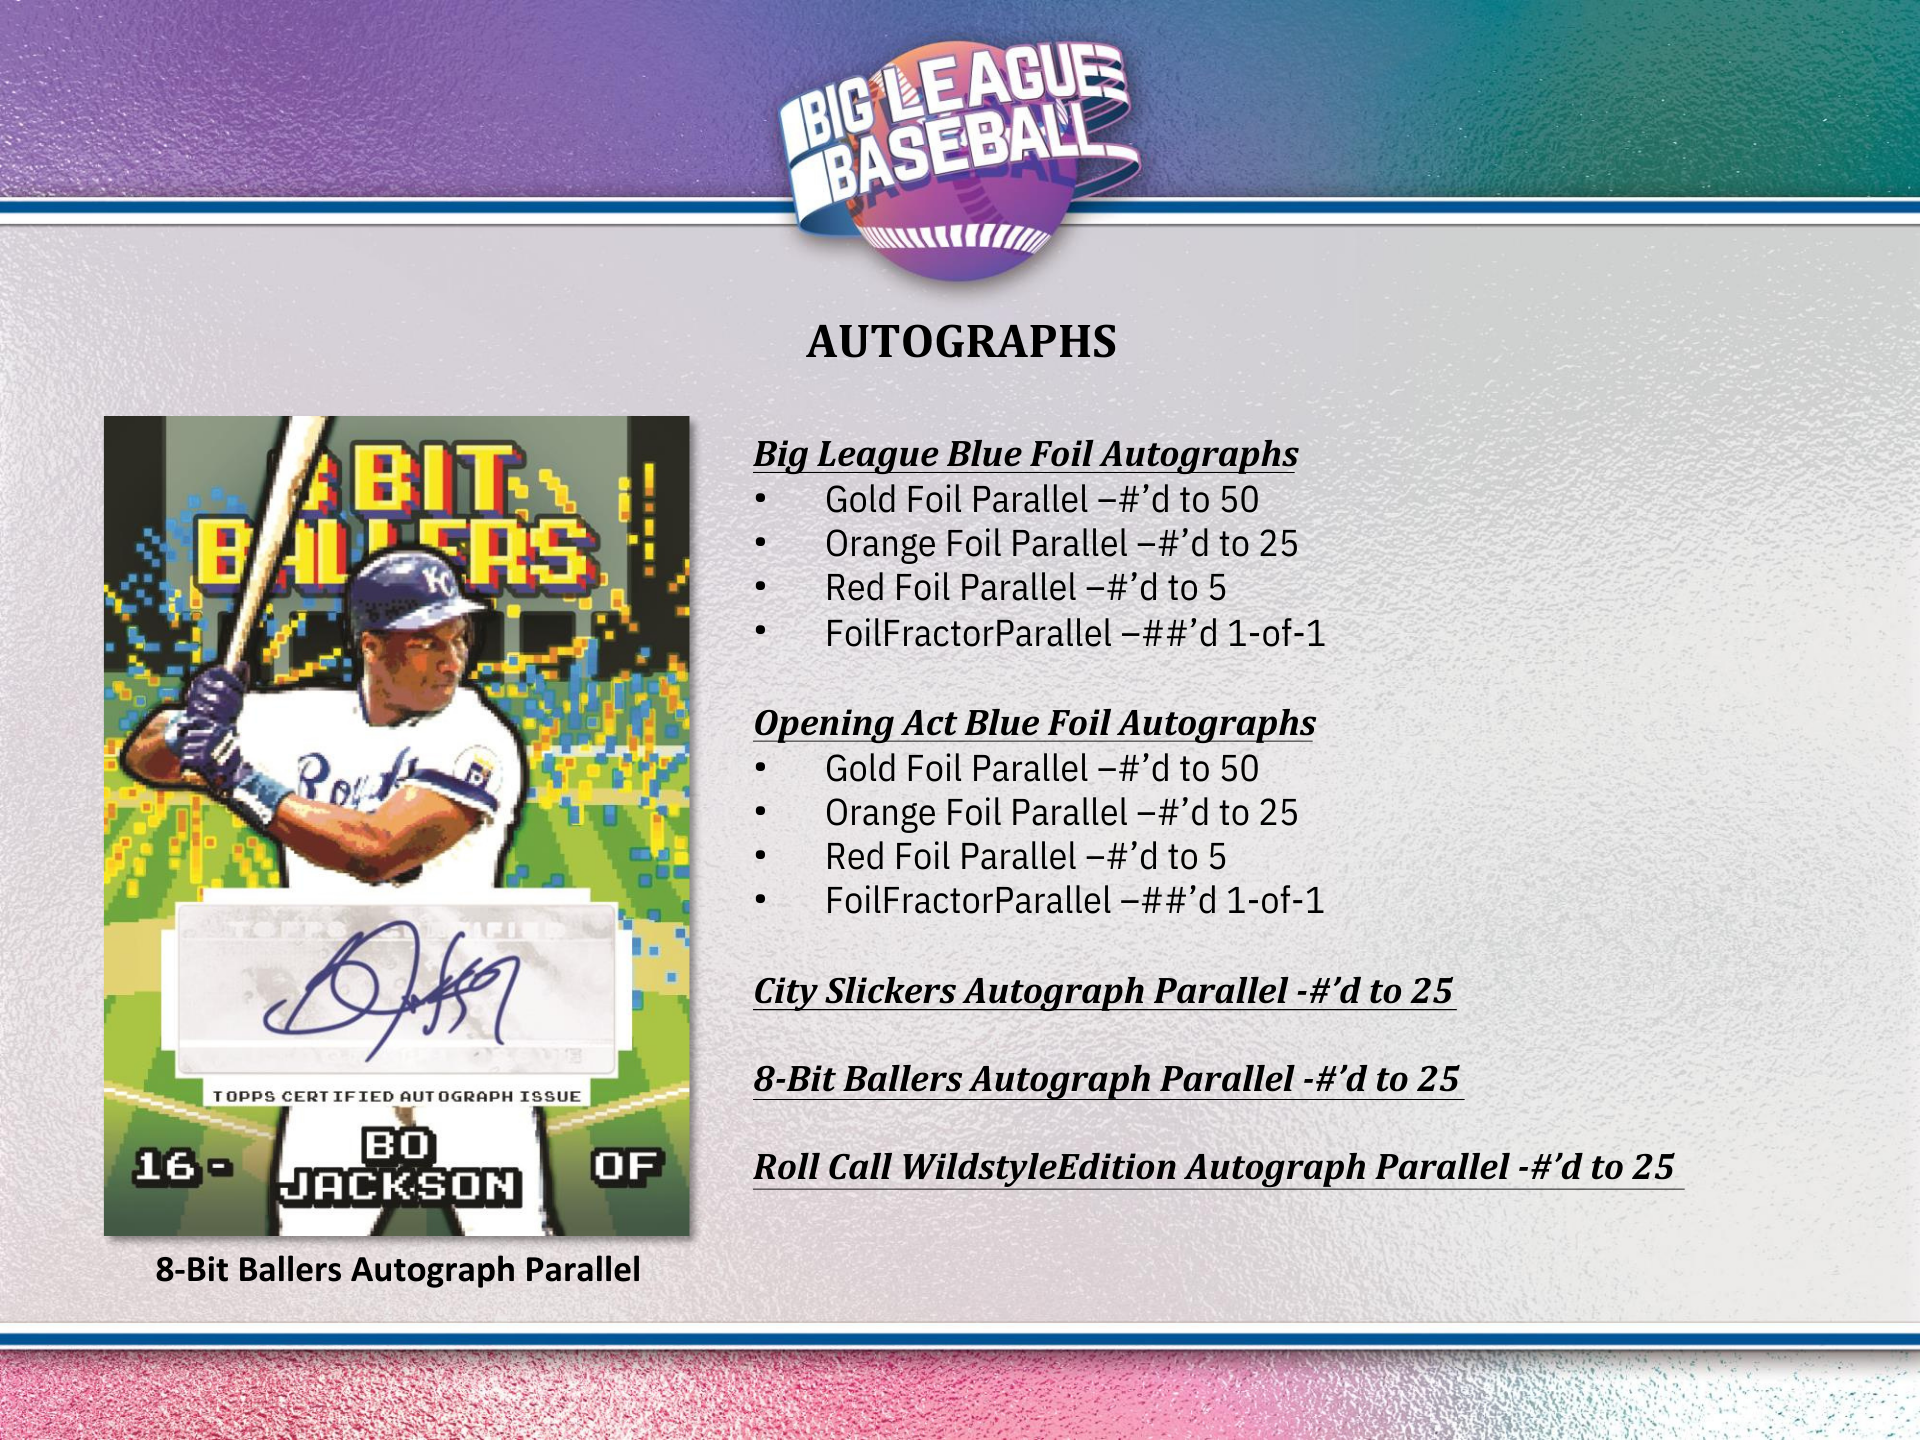 Ryan Helsley 2022 Major League Baseball All-Star Game Autographed